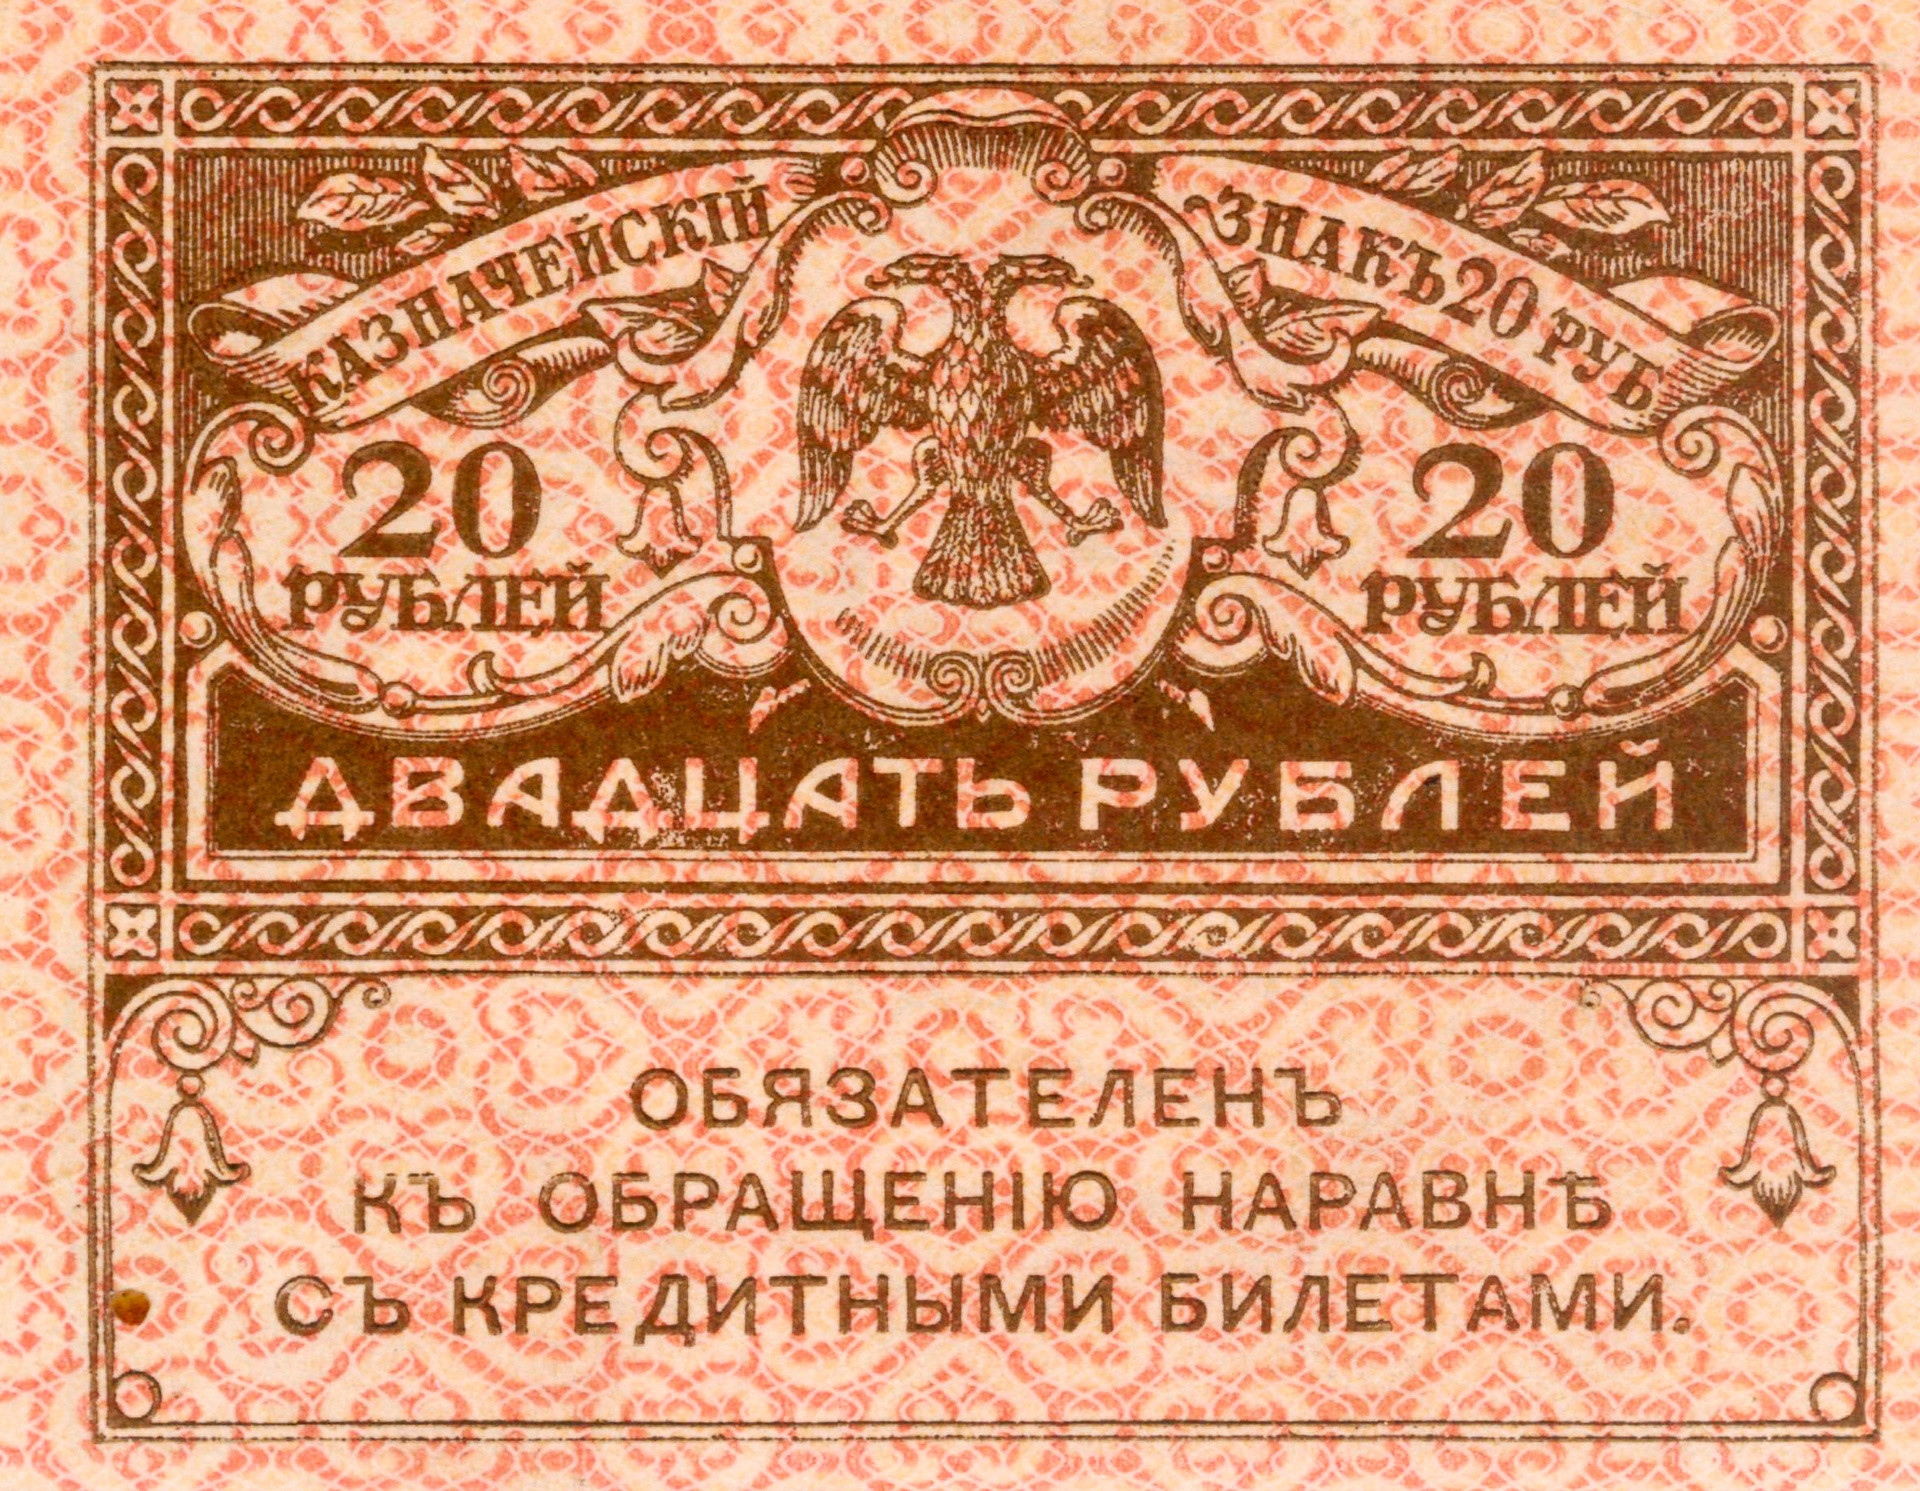 Kerenki (20 rubles)